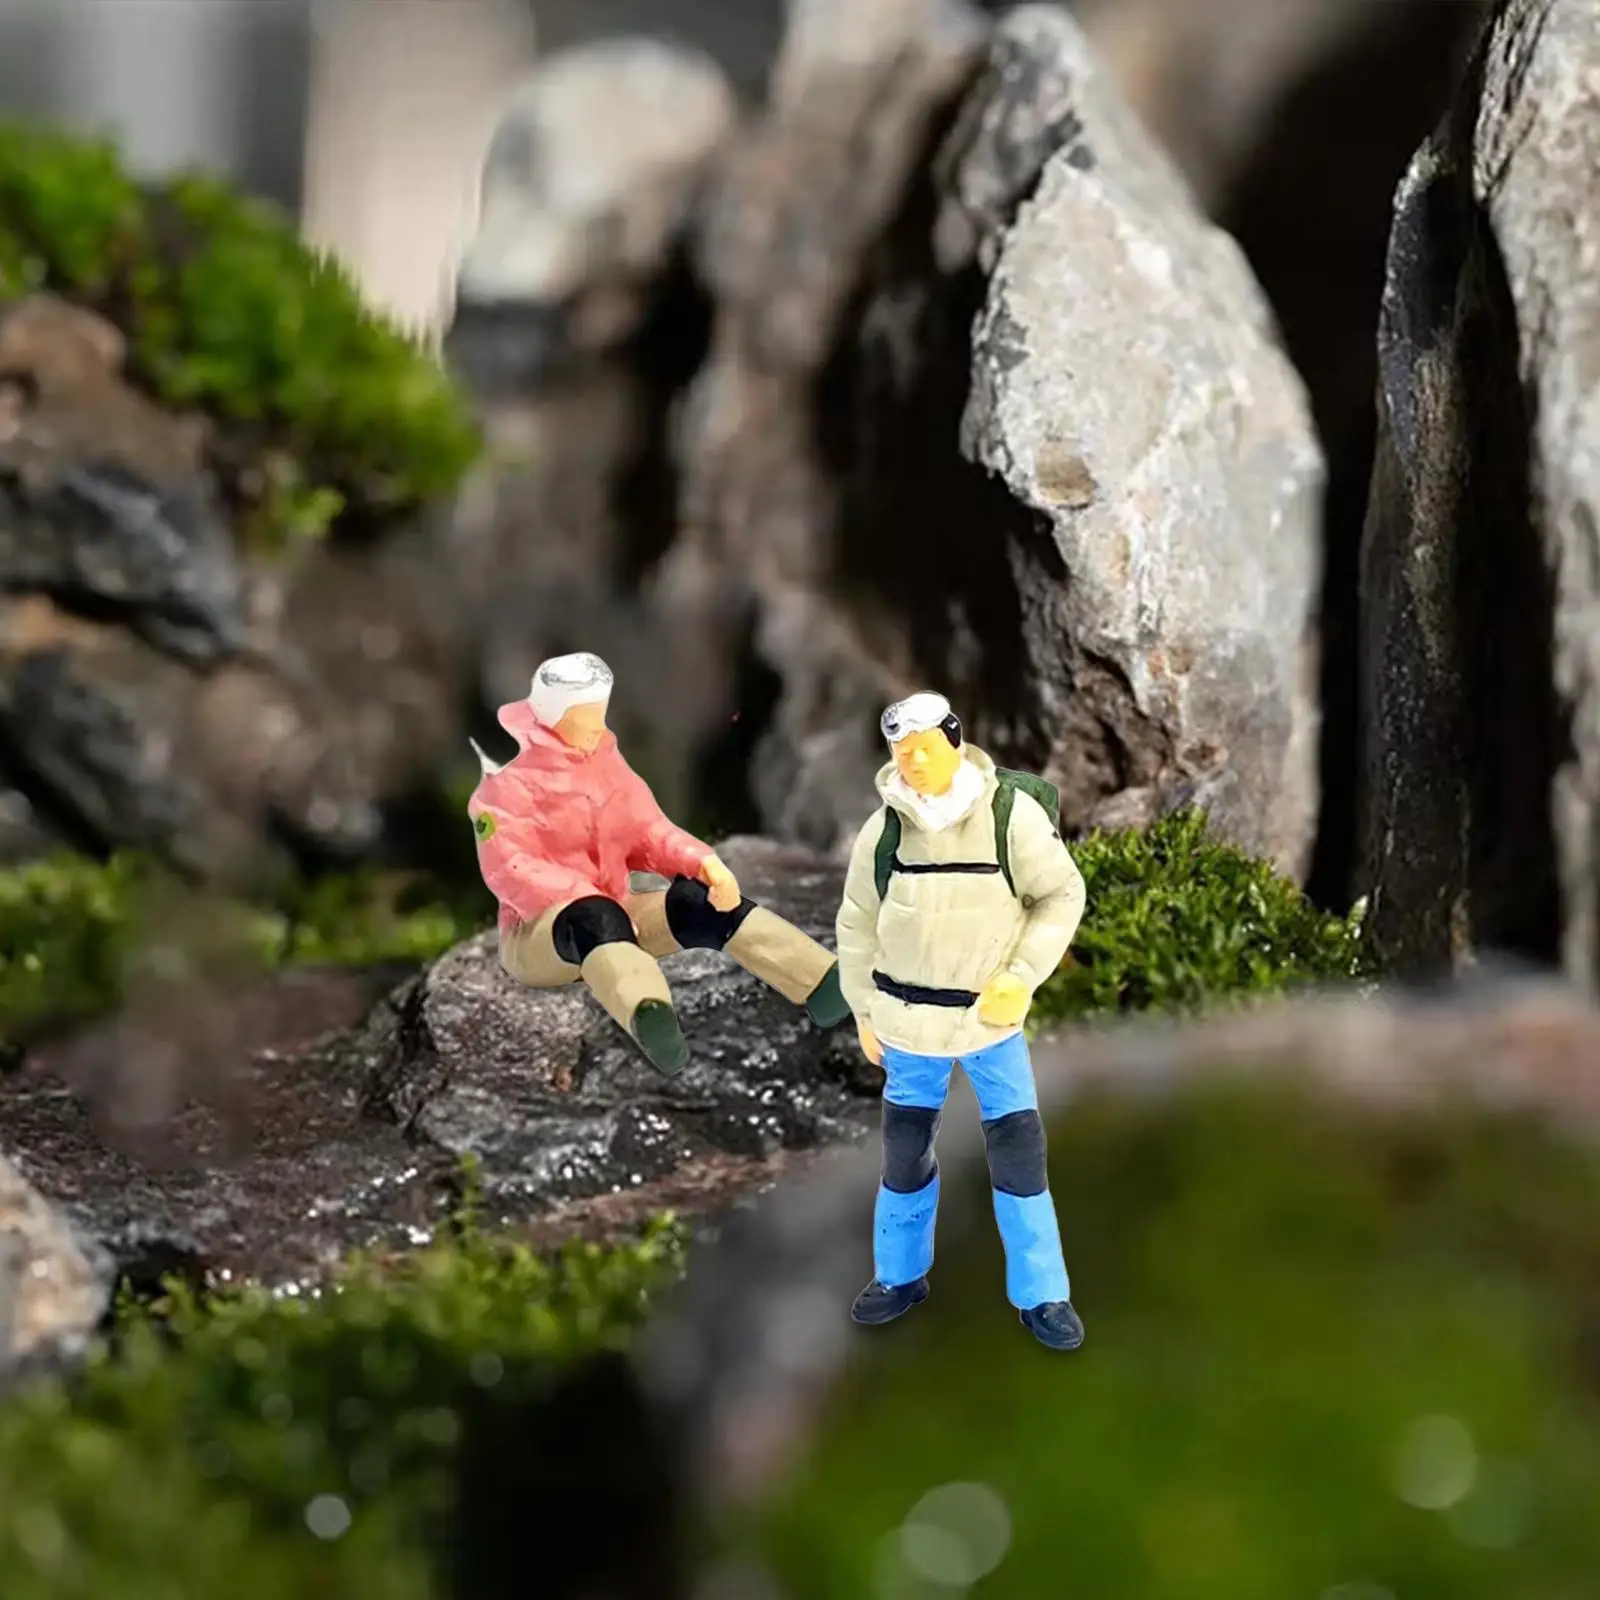 2x Miniature Scene People Dollhouse People Role Play Figure for DIY Scene